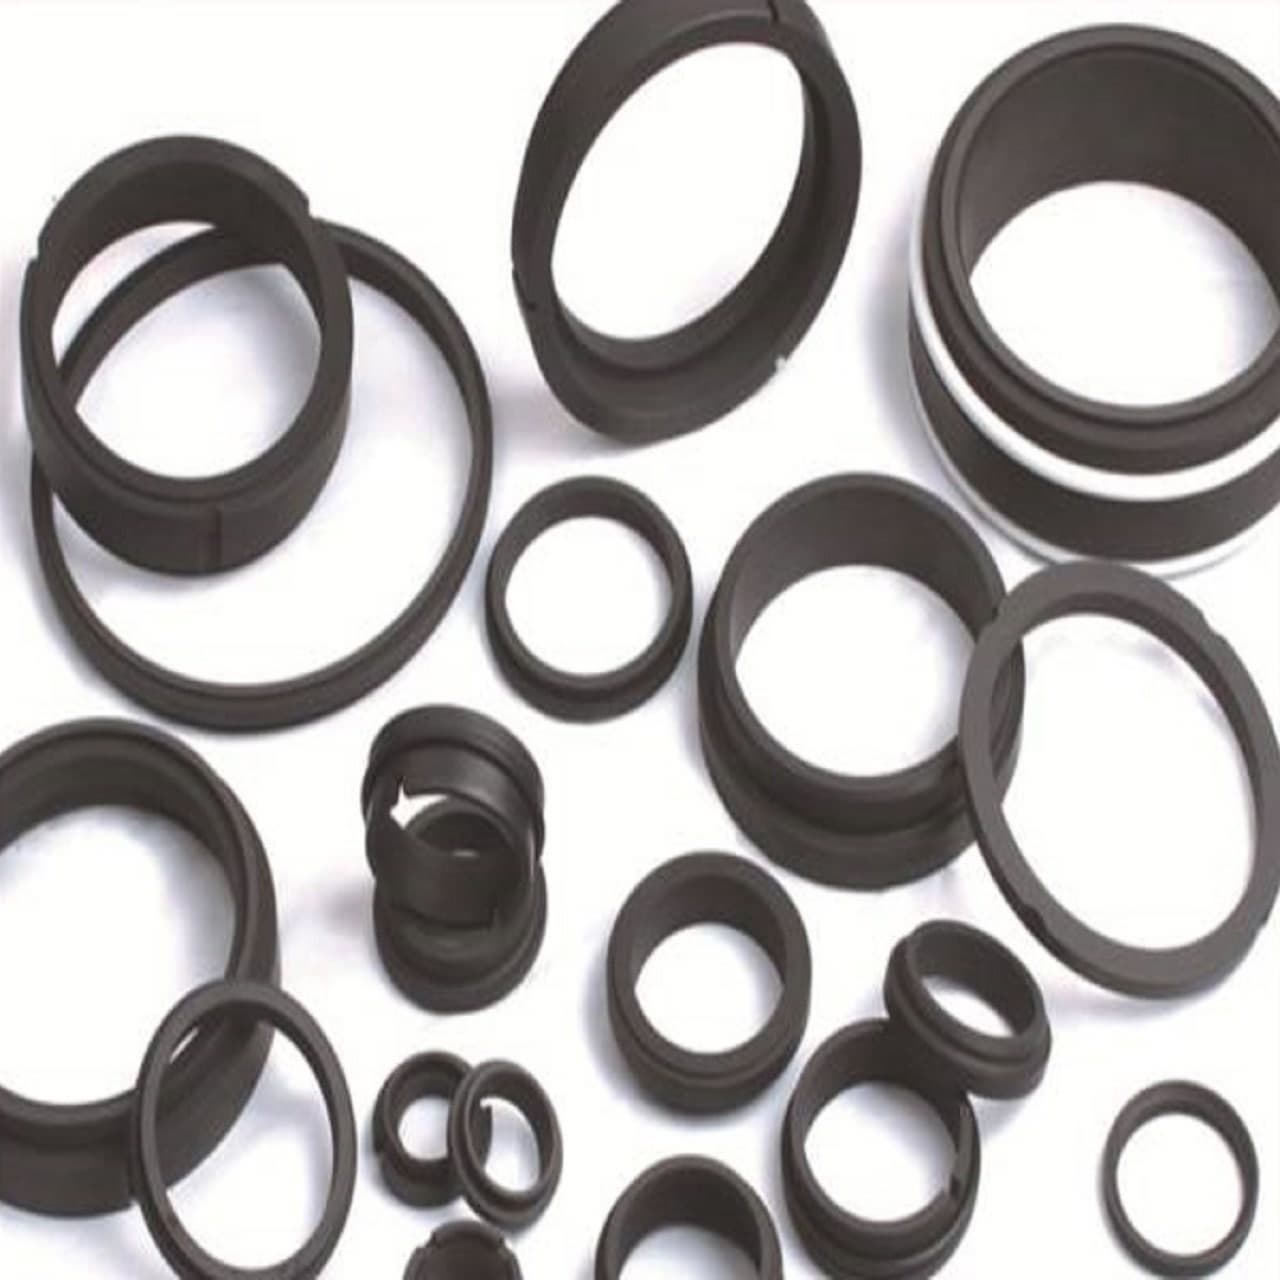 Carbon seal rings